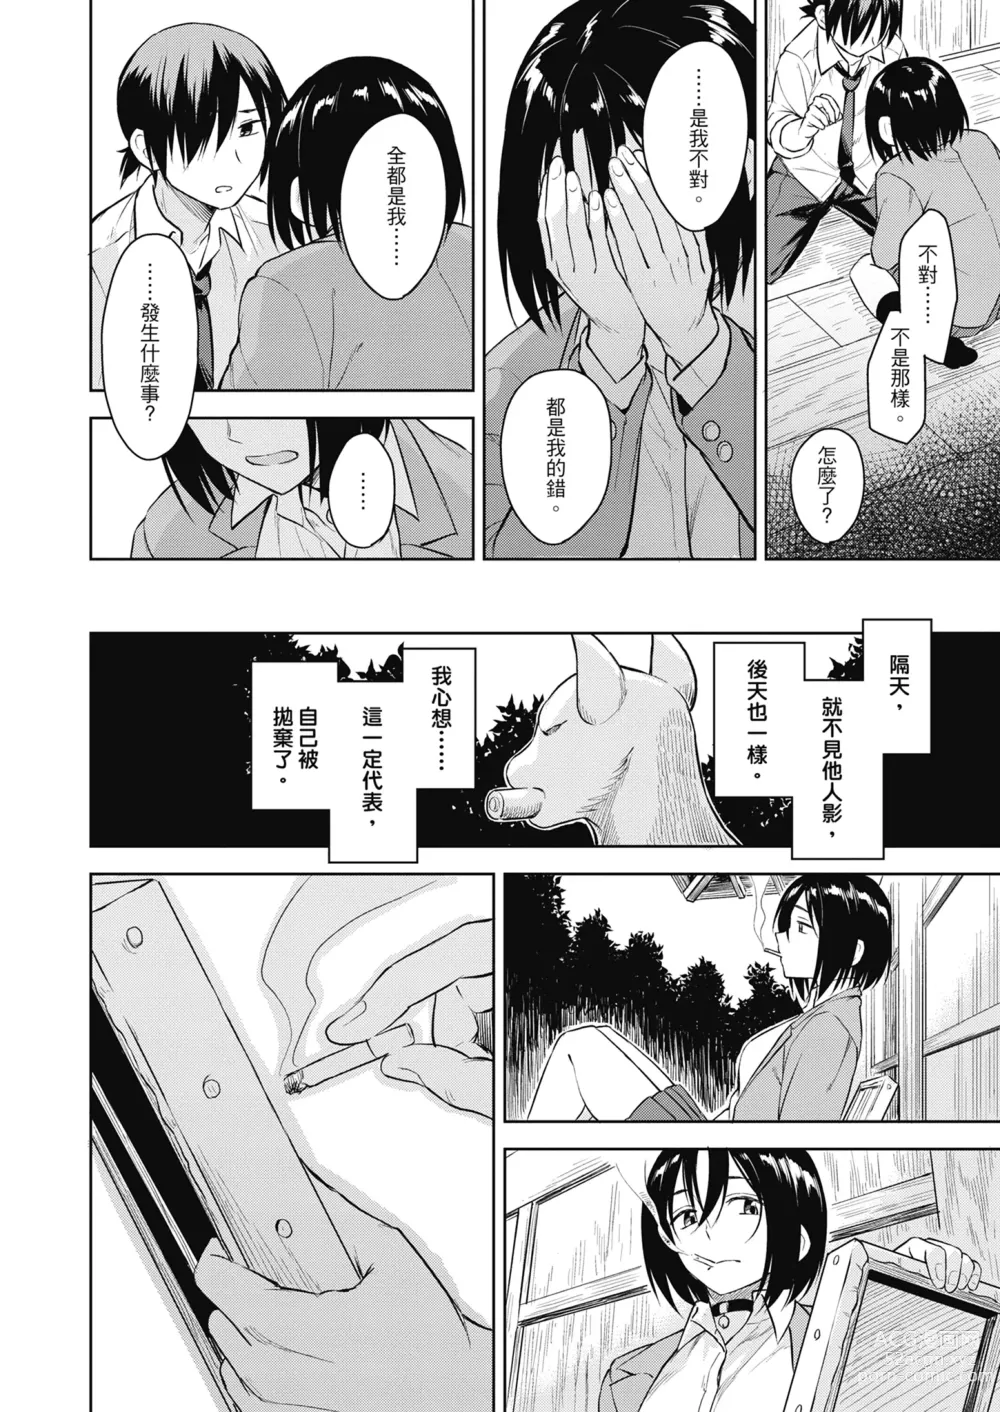 Page 200 of manga Sennetsu  - The desire in the girl (decensored)